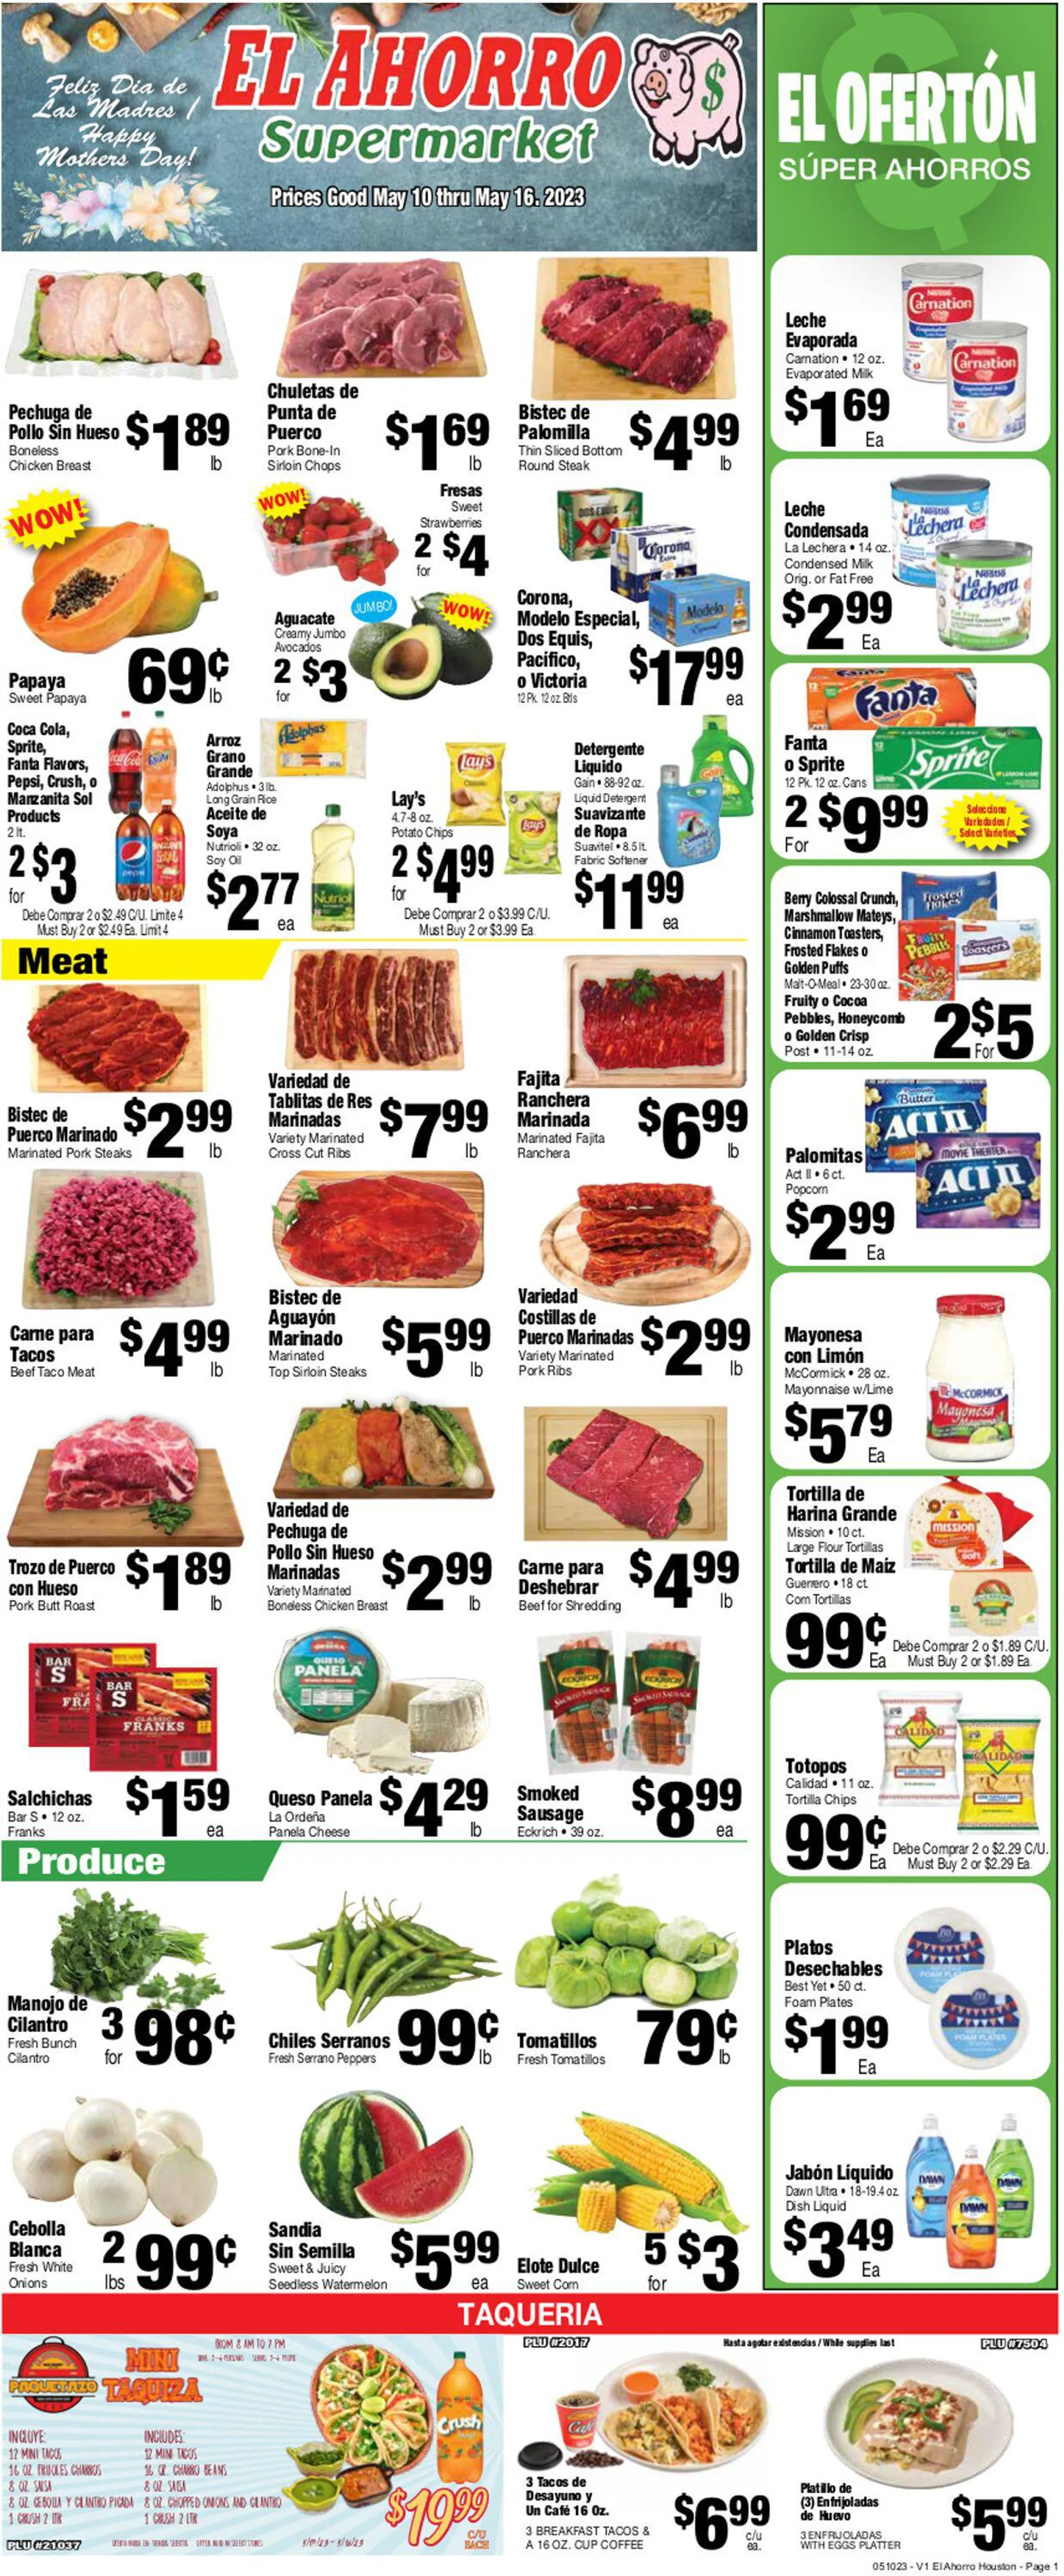 El Ahorro Supermarket Current weekly ad - 1